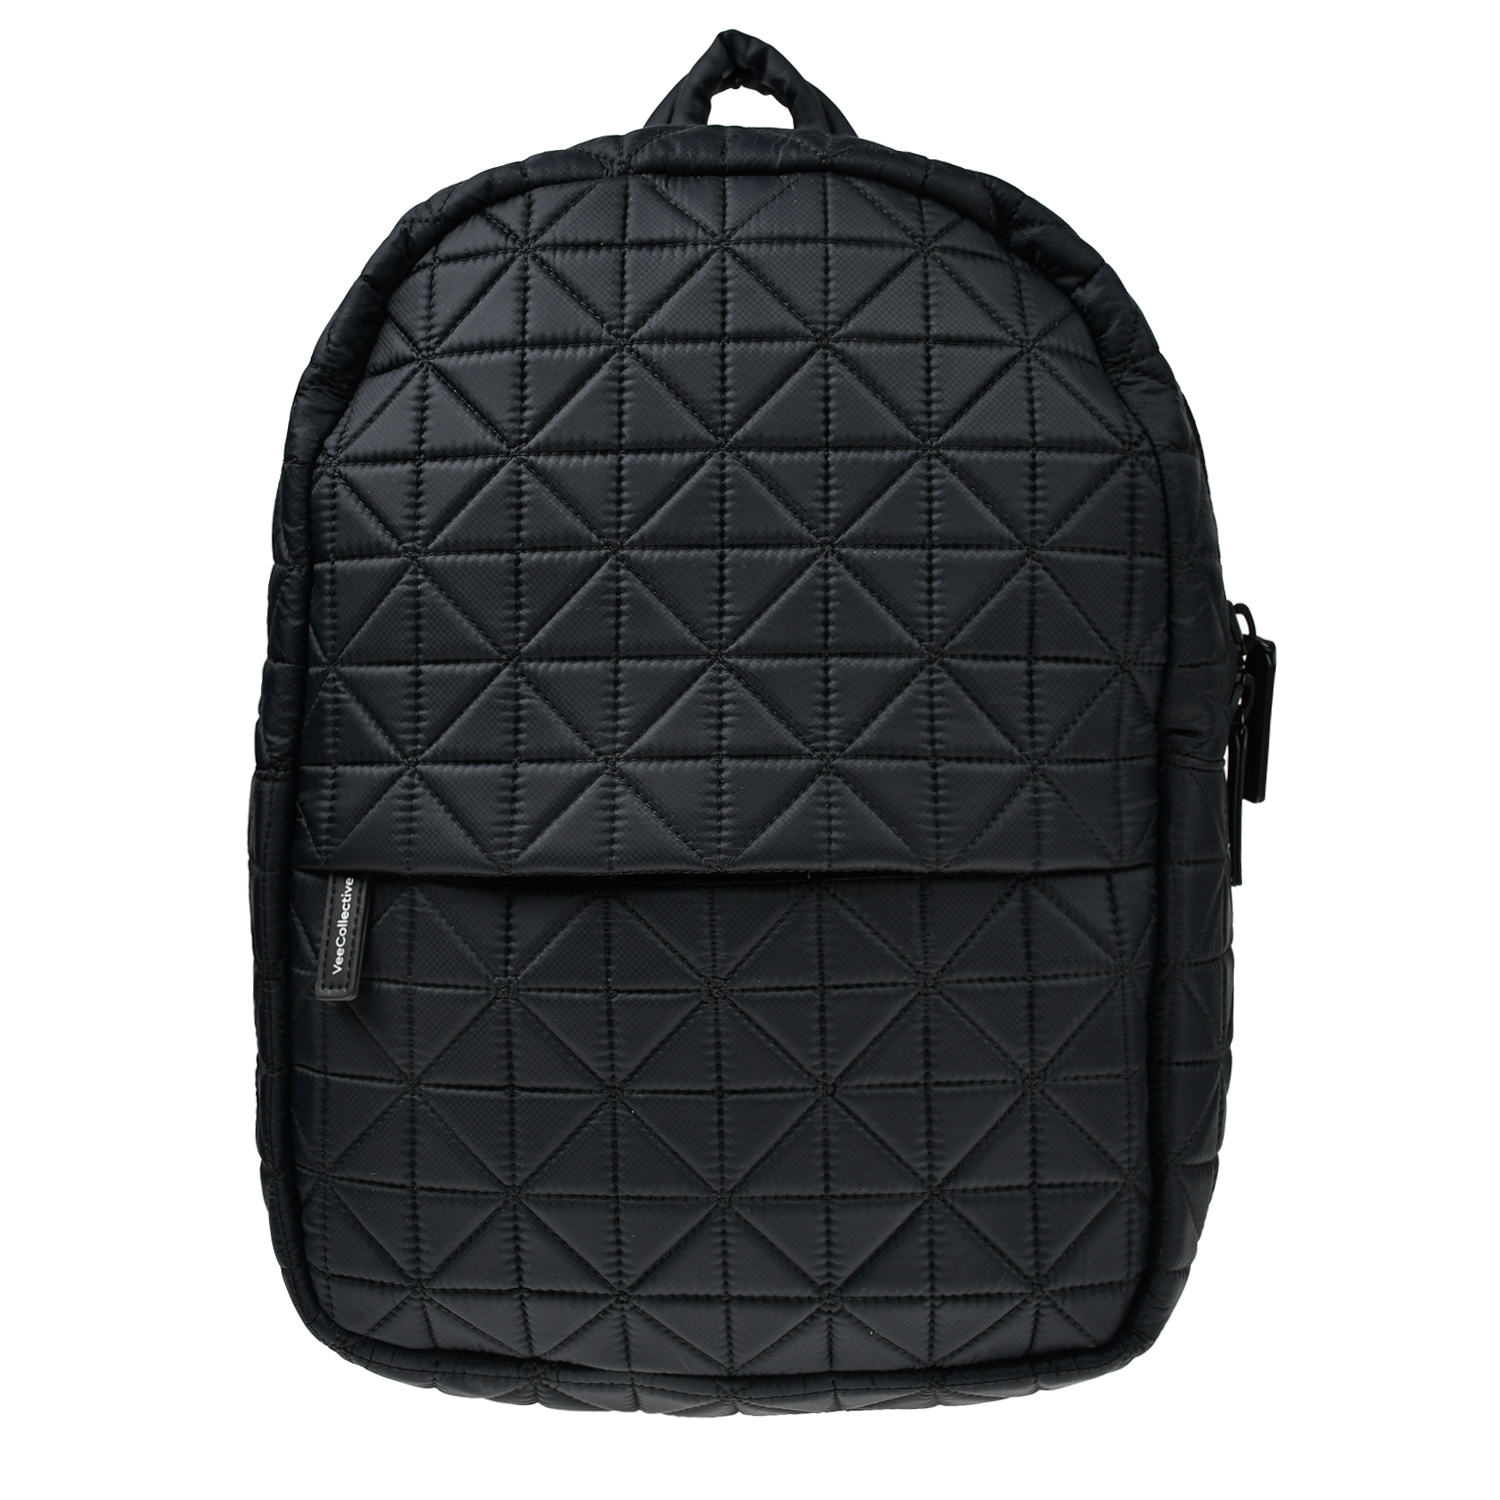 Рюкзак Vee Backpack, черный VeeCollective, размер unica